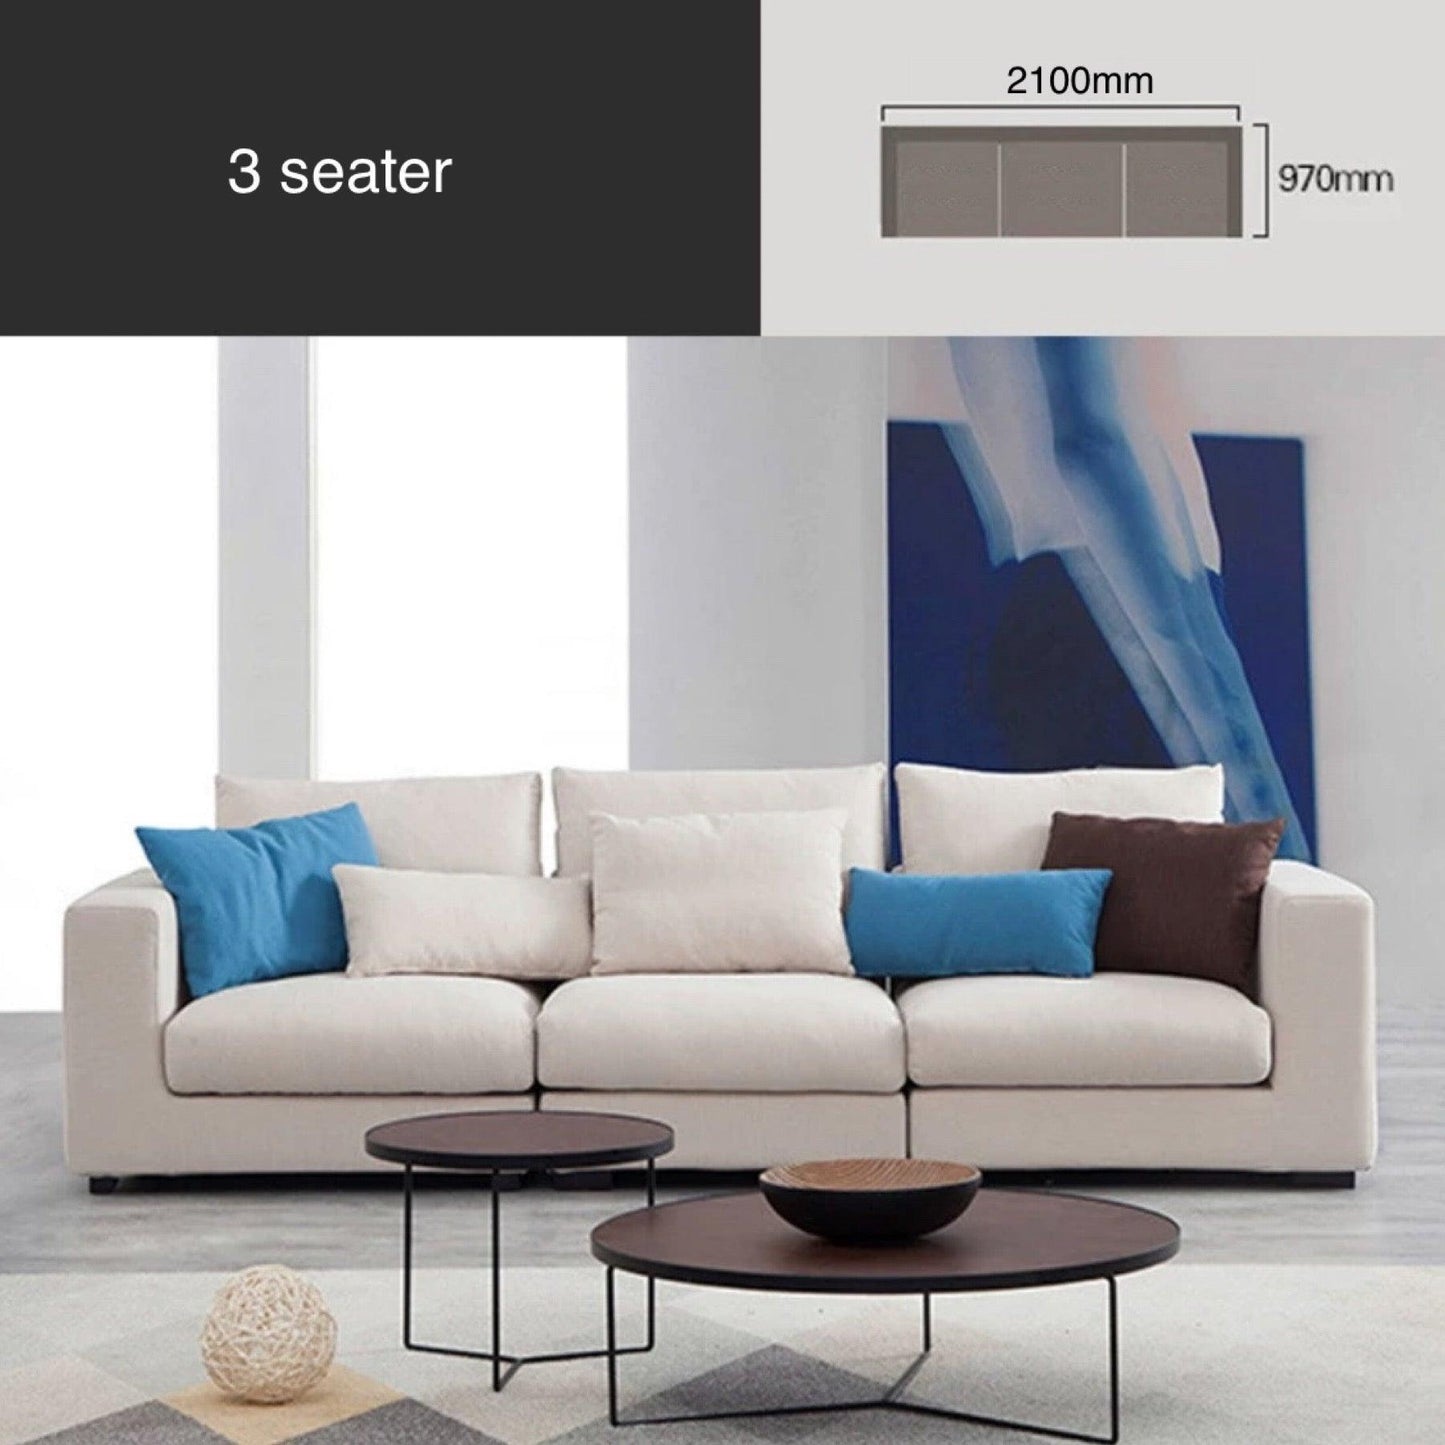 home-atelier-f31a Cotton Linen Fabric / 3 seater/ Length 210cm / Cream Bellini Sectional L-shape Corner Seat Sofa